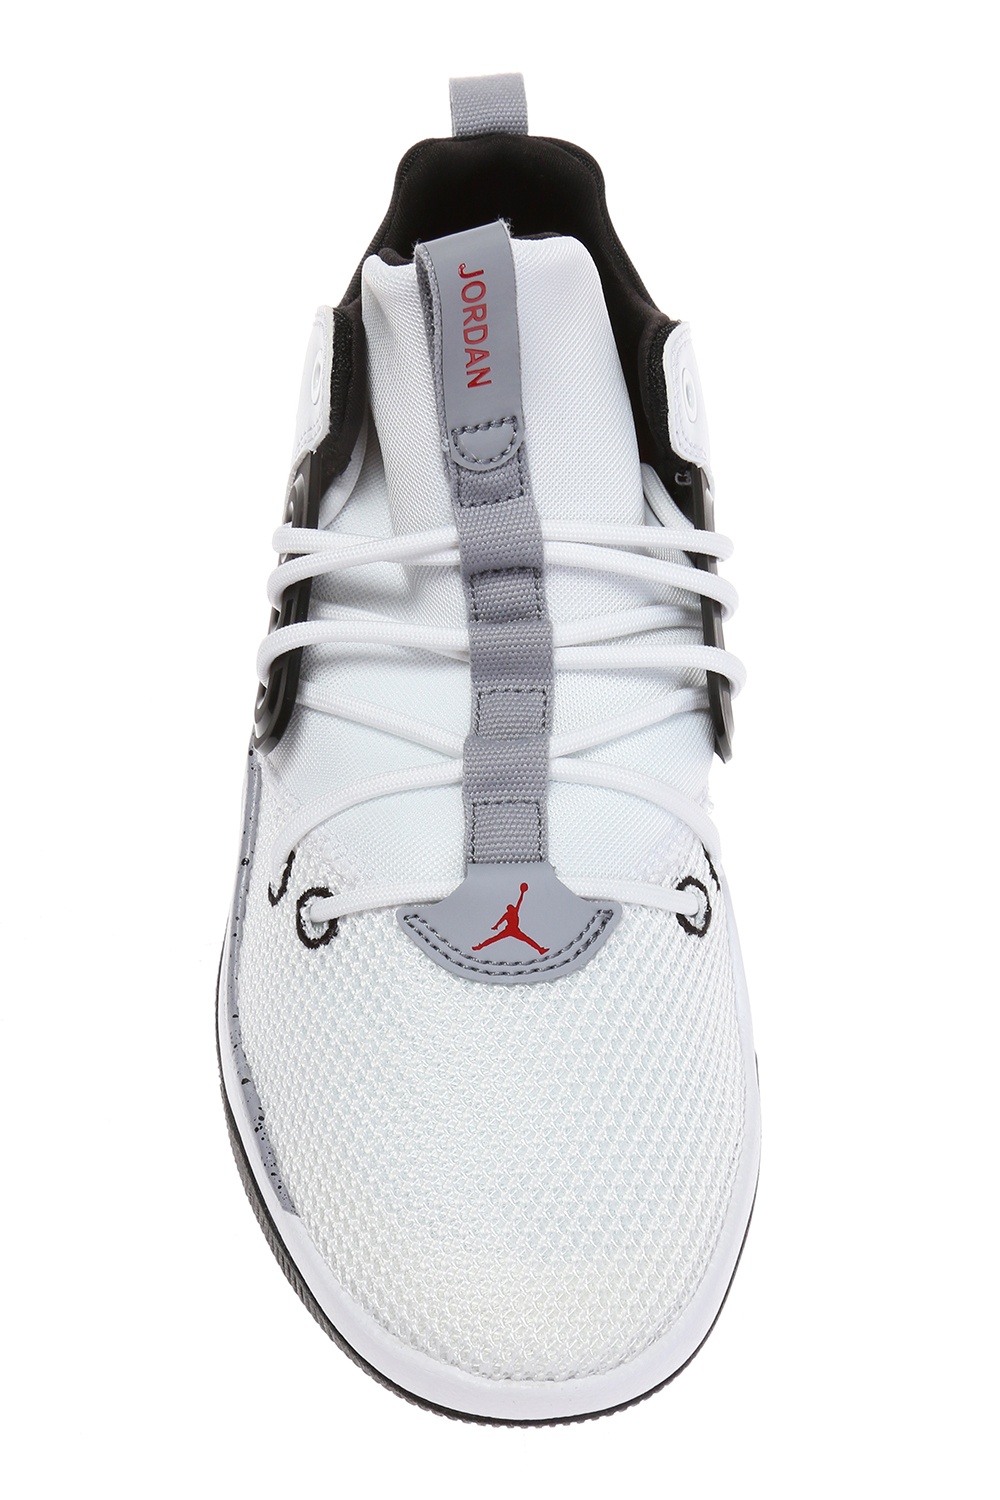 værdighed En skønne dag Perennial White 'Jordan DNA' sneakers Nike - Vitkac France